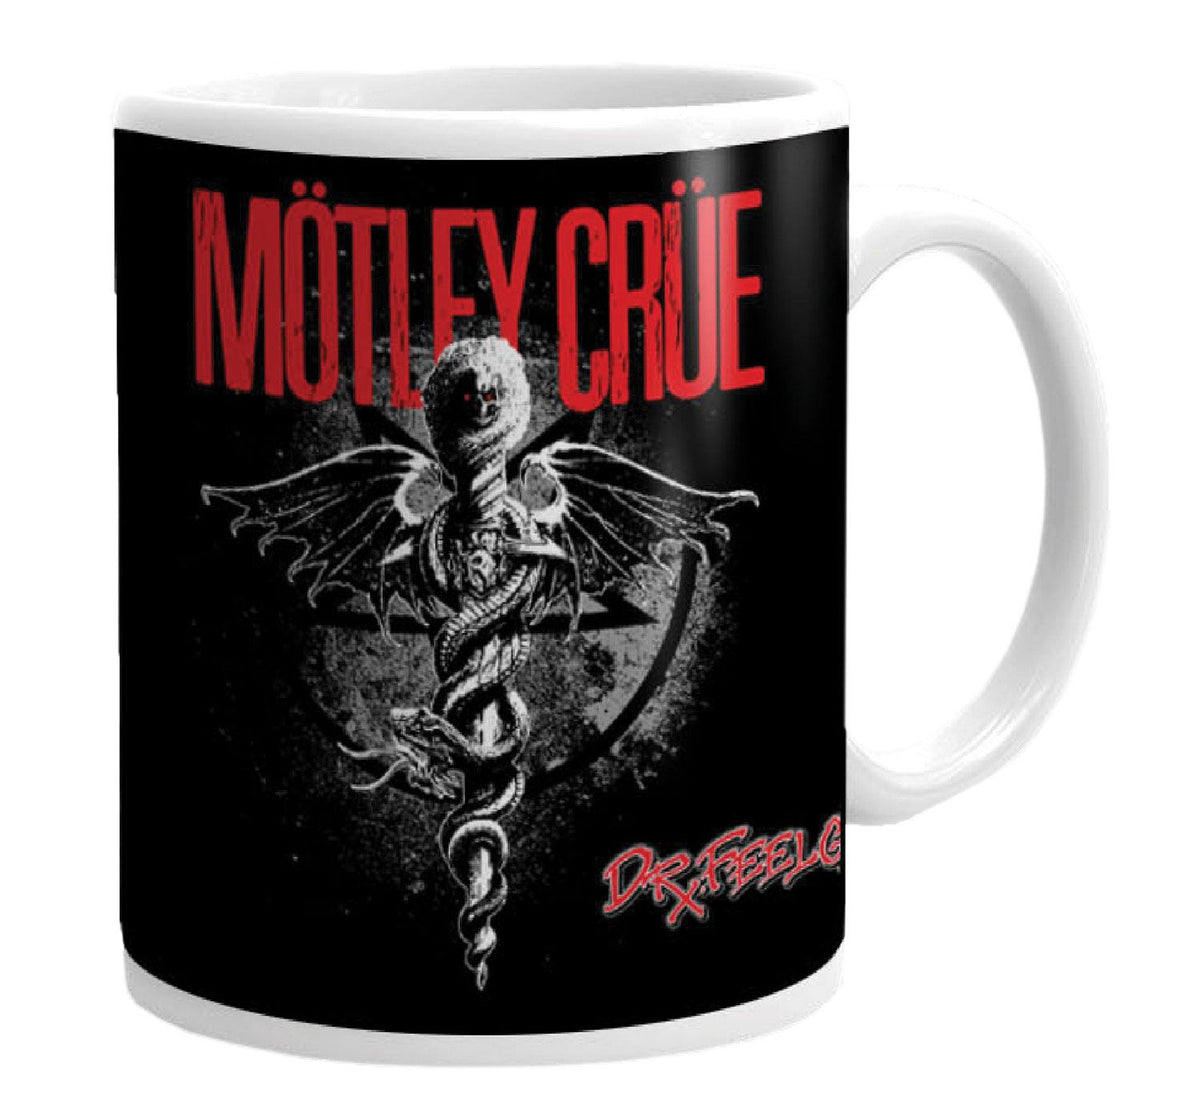 Mötley Crüe Mug Dr. Feelgood 4039103739605